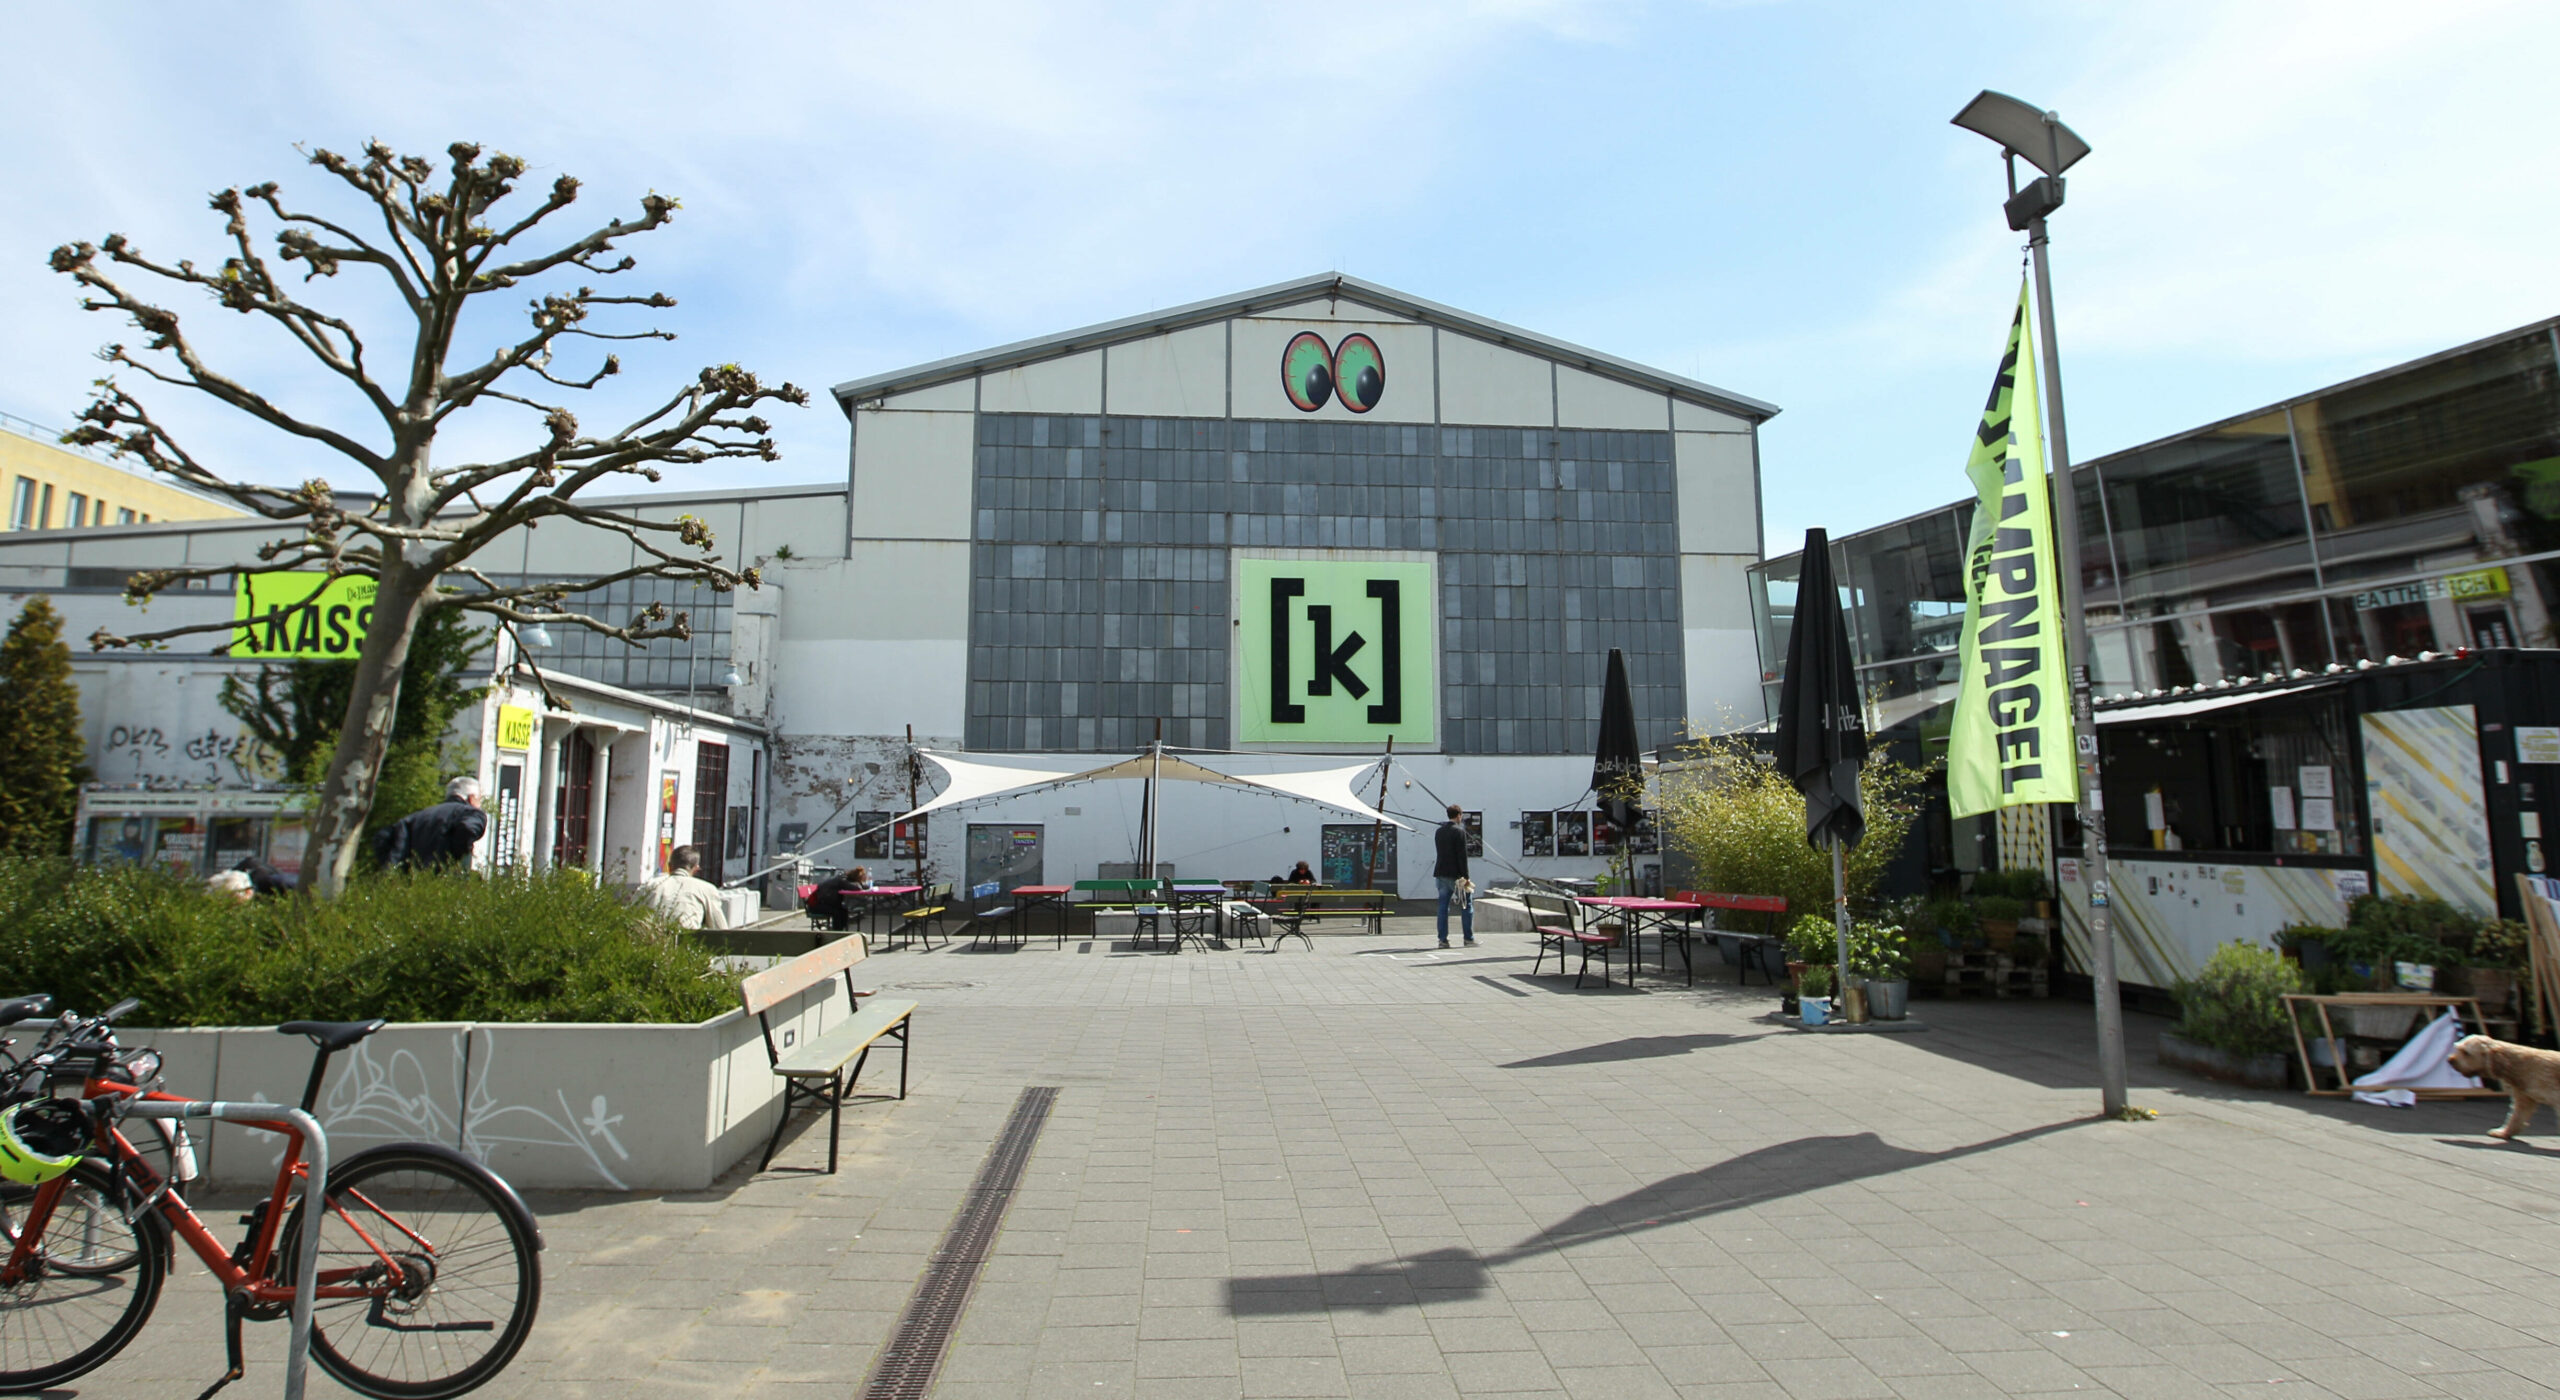 Die Kulturfabrik Kampnagel in der Jarrestraße 20 in Hamburg-Winterhude. (Archivbild)